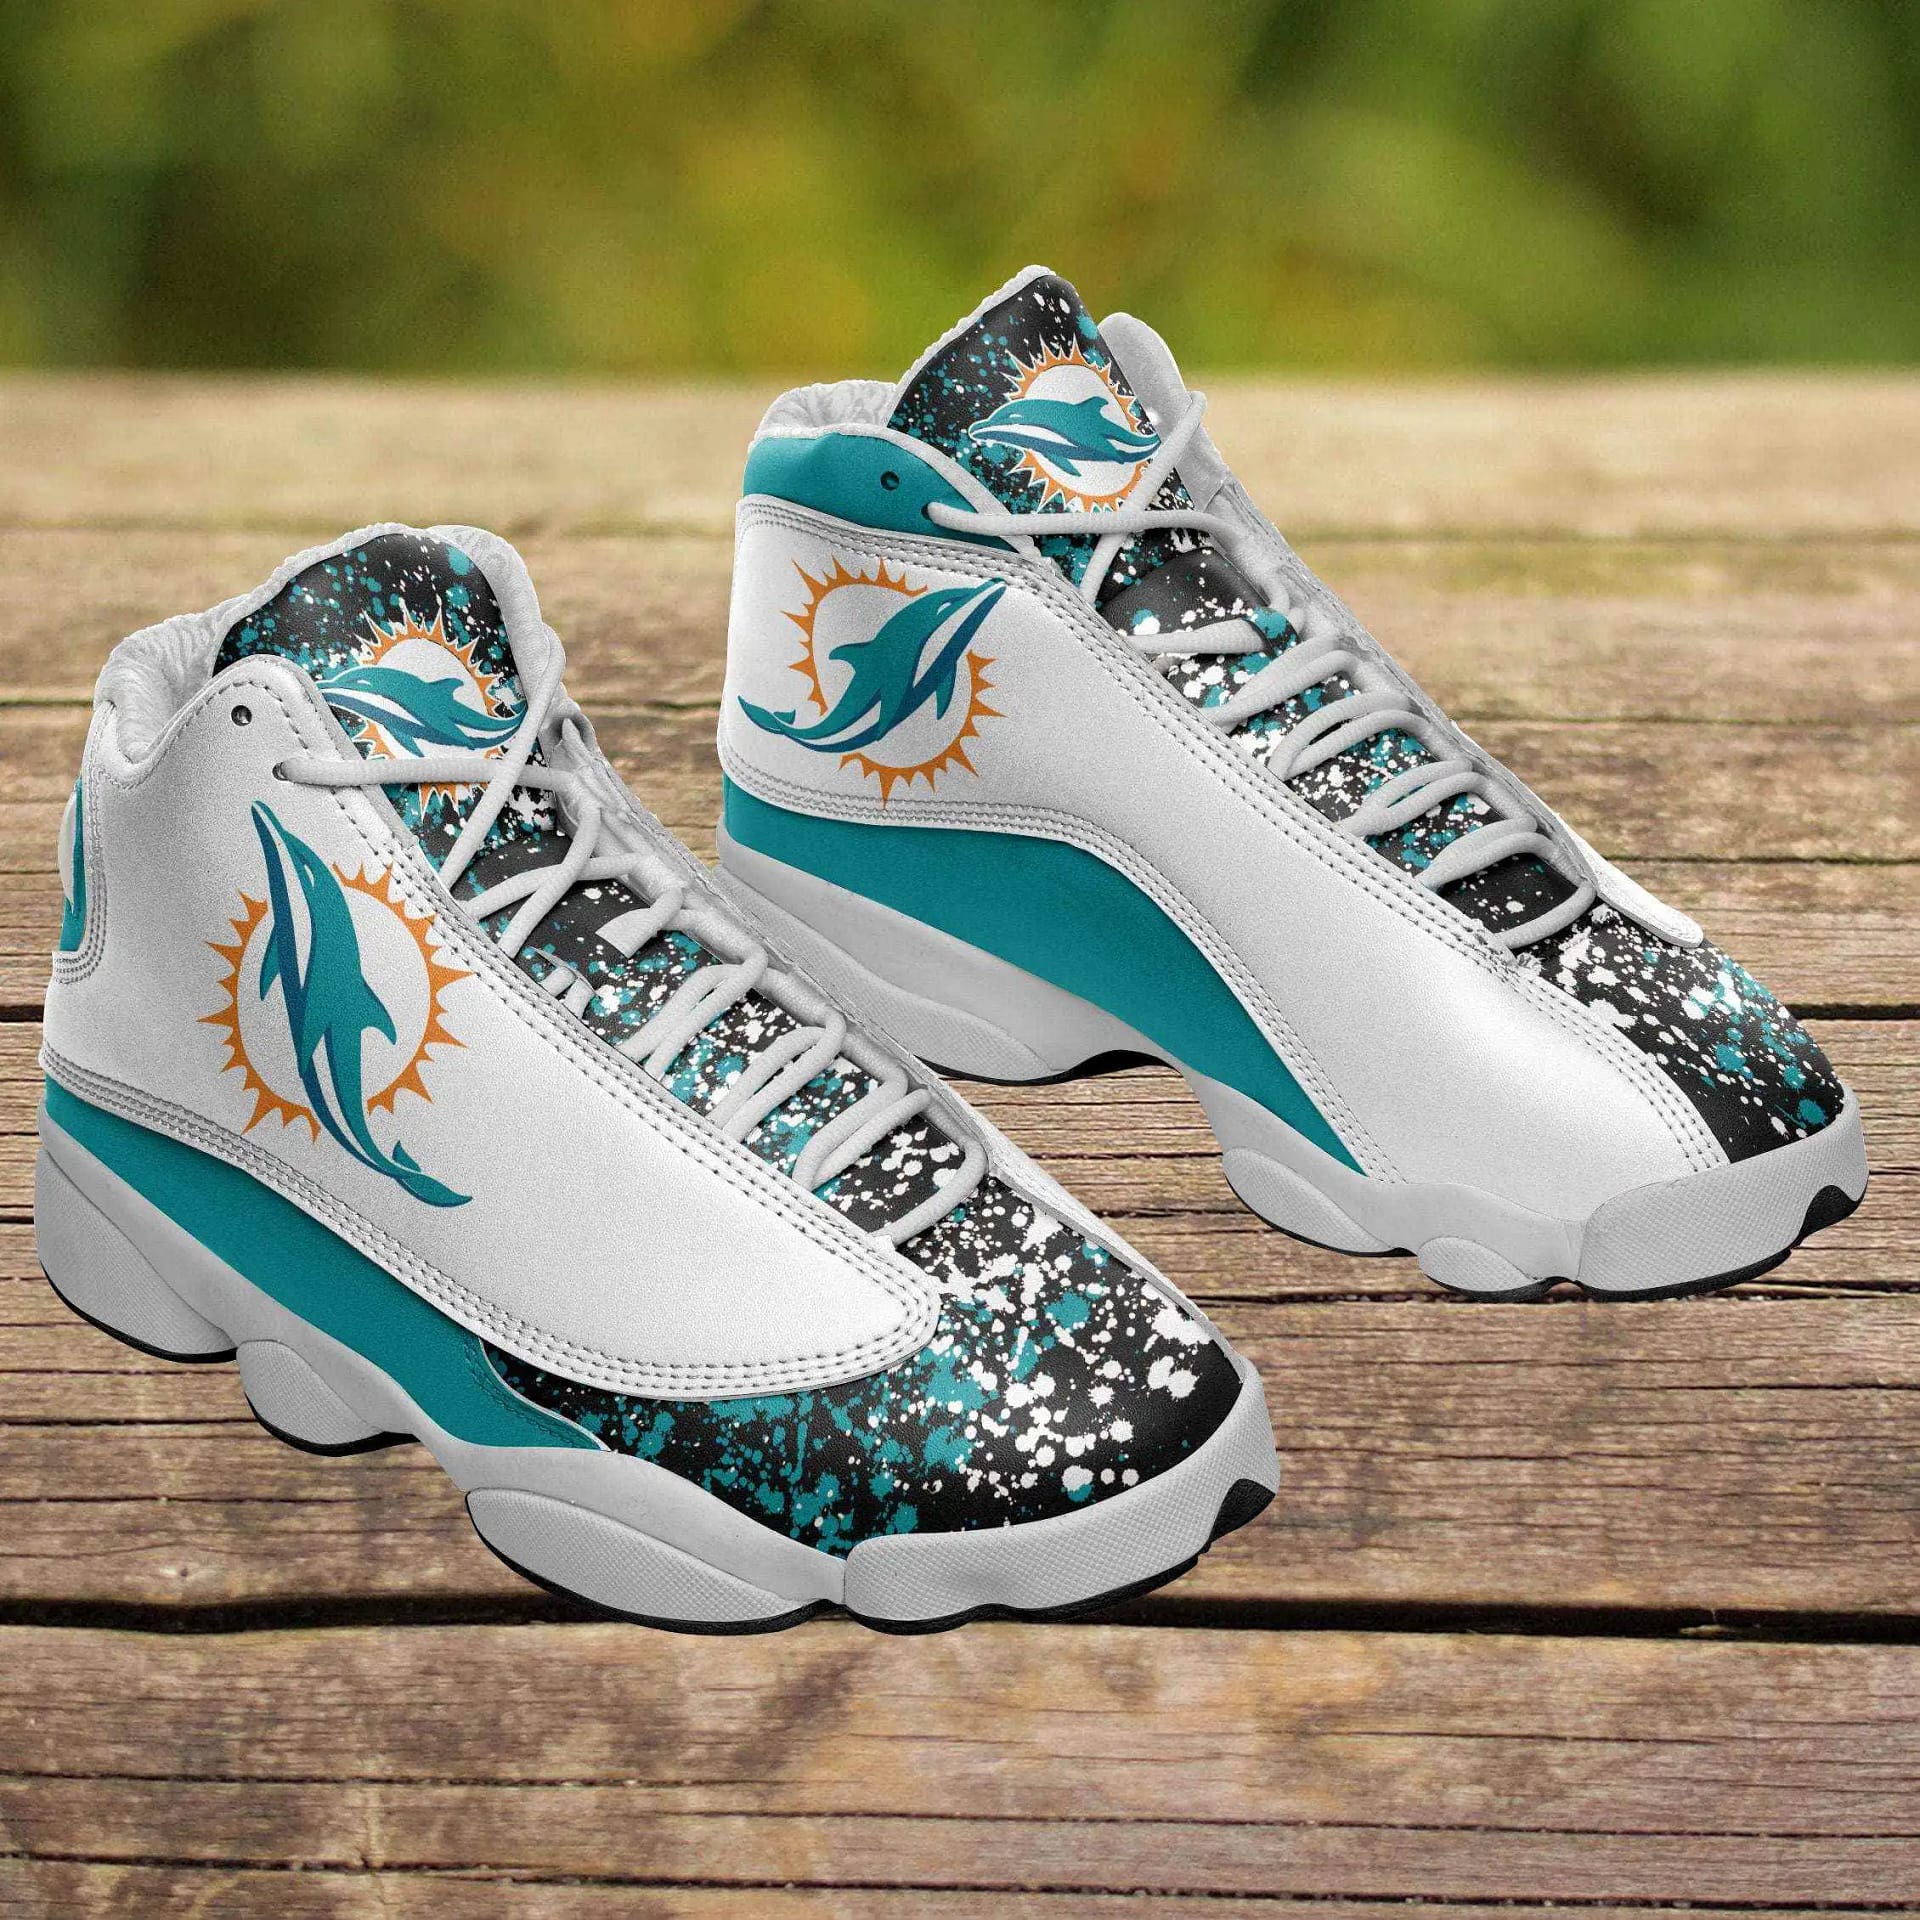 Miami Dolphins Air Jordan Shoes